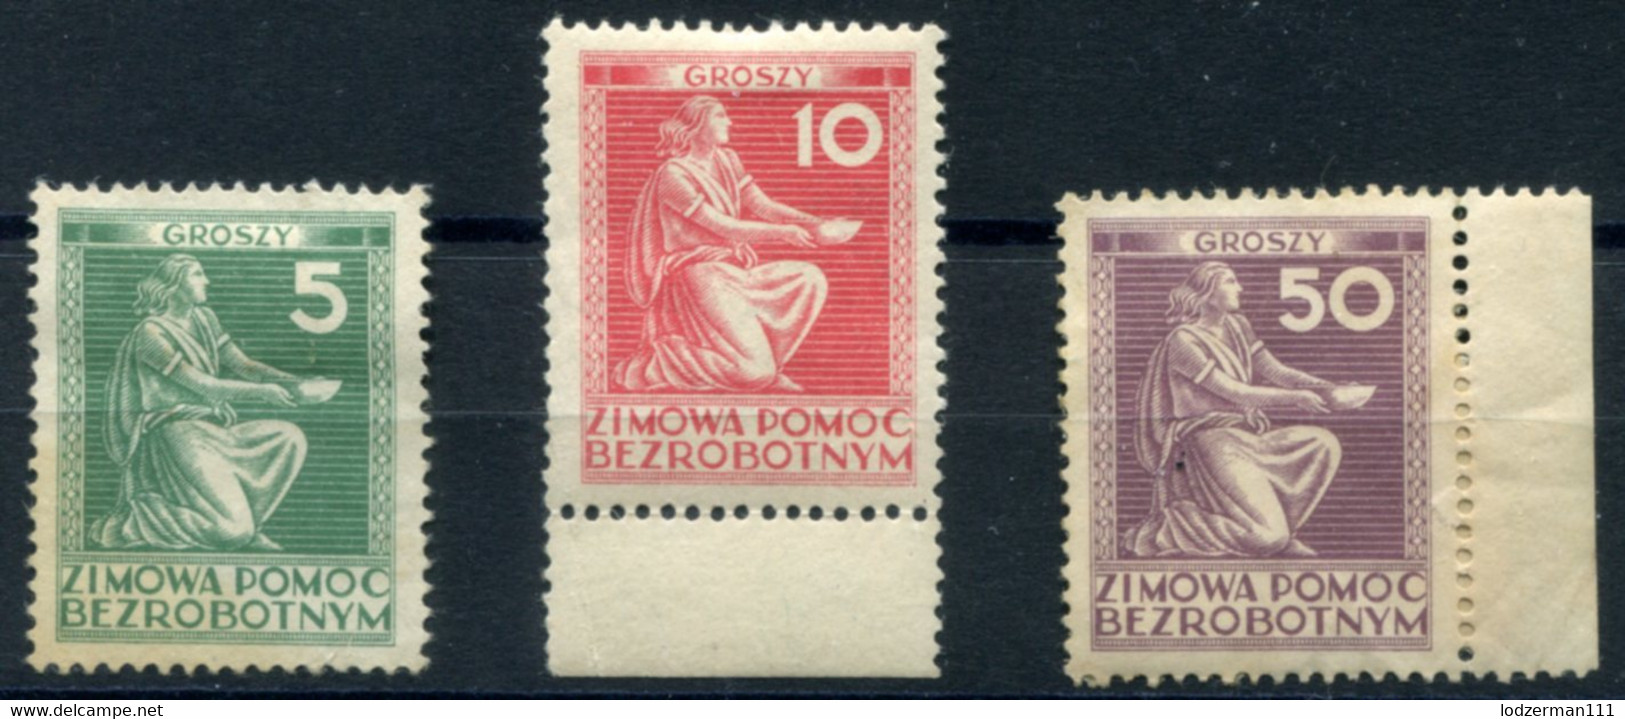 1935 Surtax BEZROBOTNYM (unemployment) - 3 Stamps (MNG-MH) Rare - Fiscali